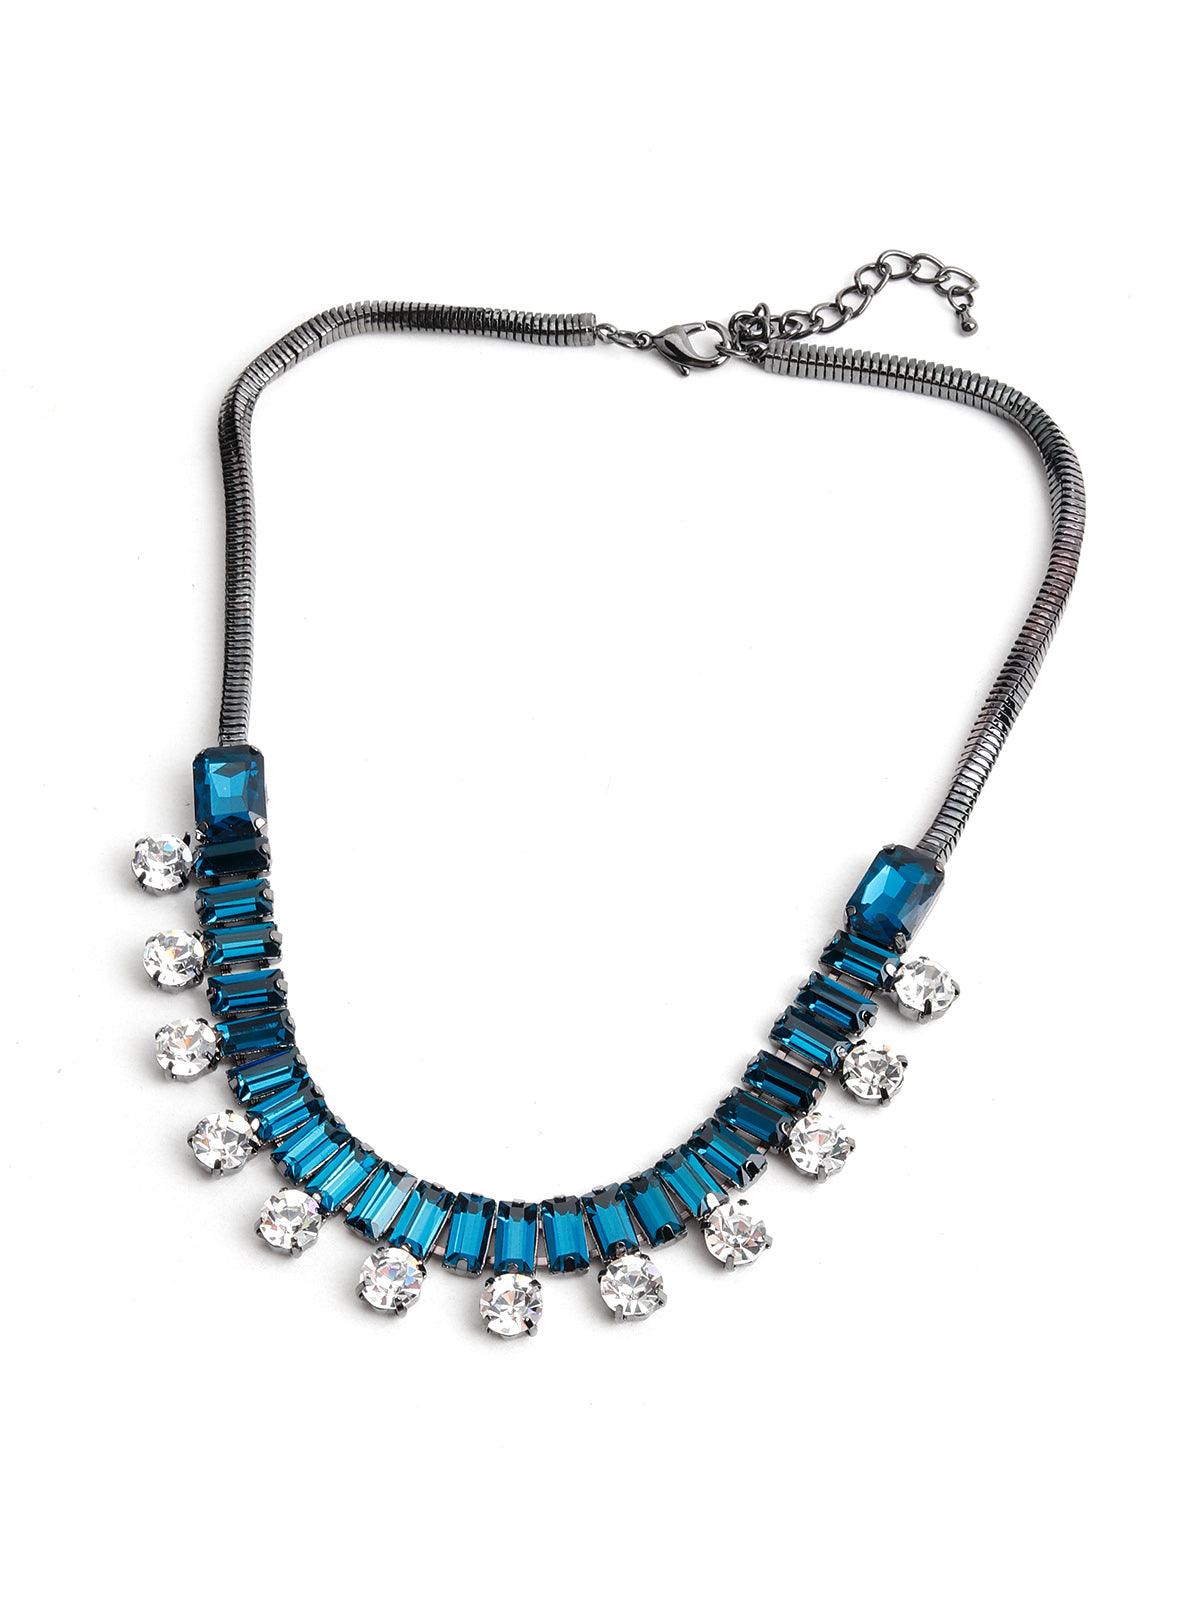 Sumptuous turquoise gunmetal collar necklace - Odette